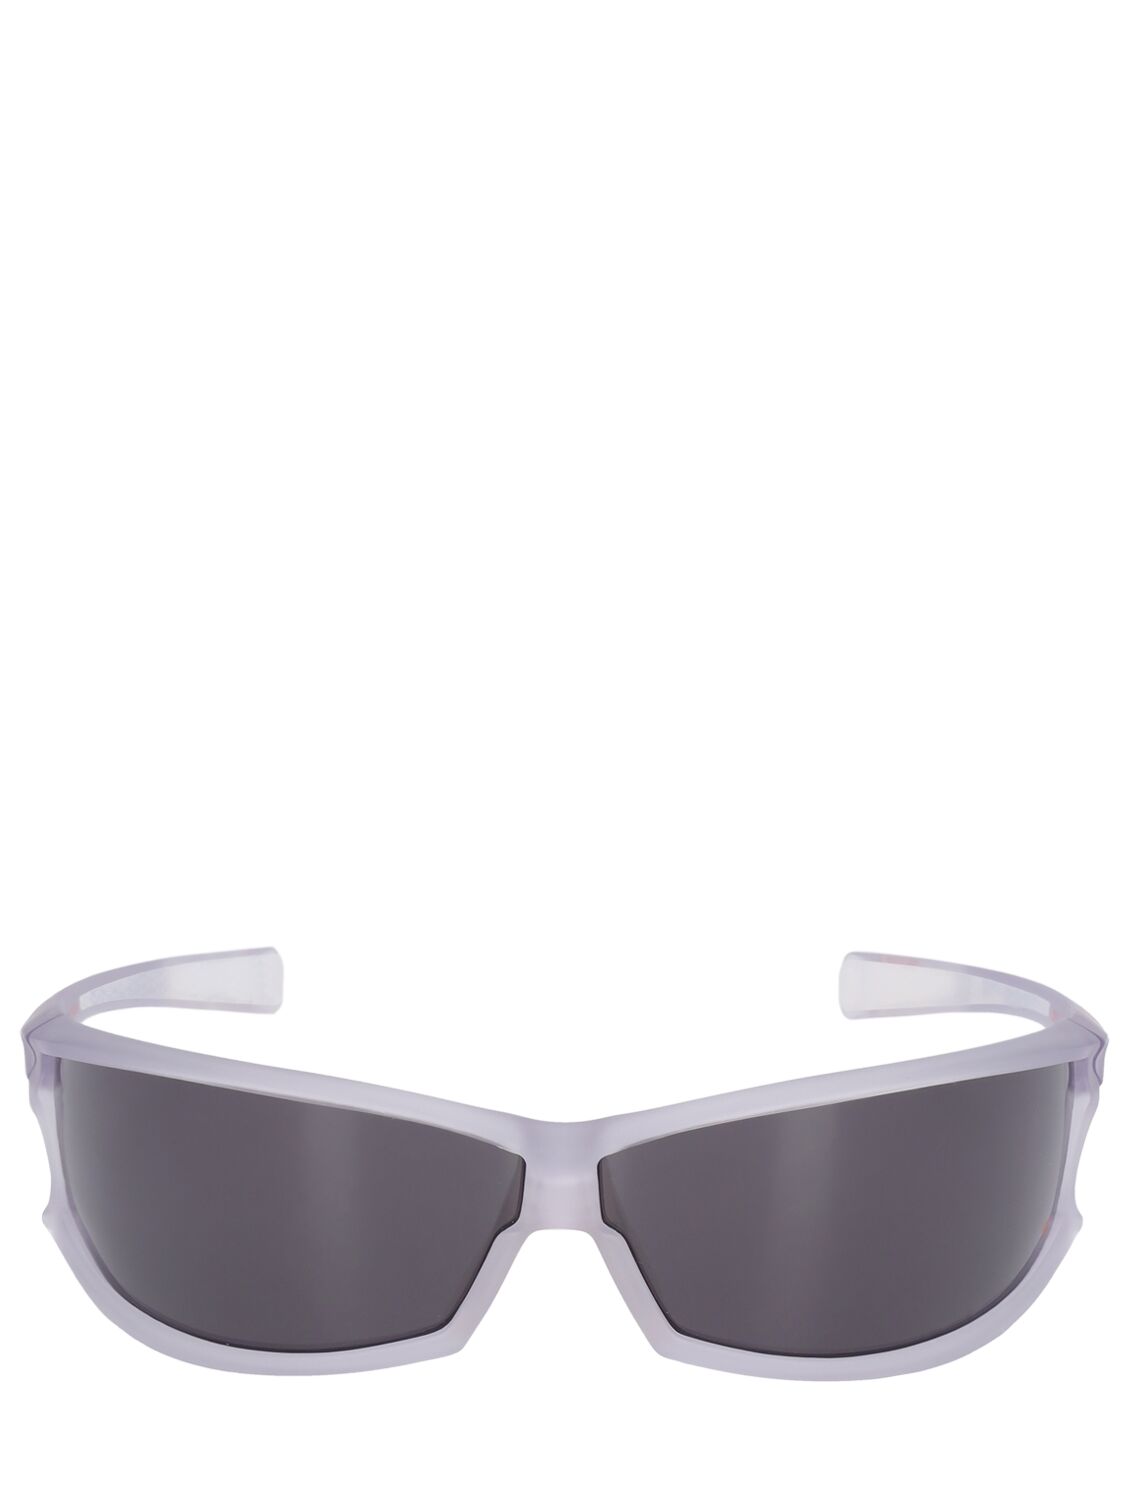 Image of Onyx Fog Grey Sunglasses